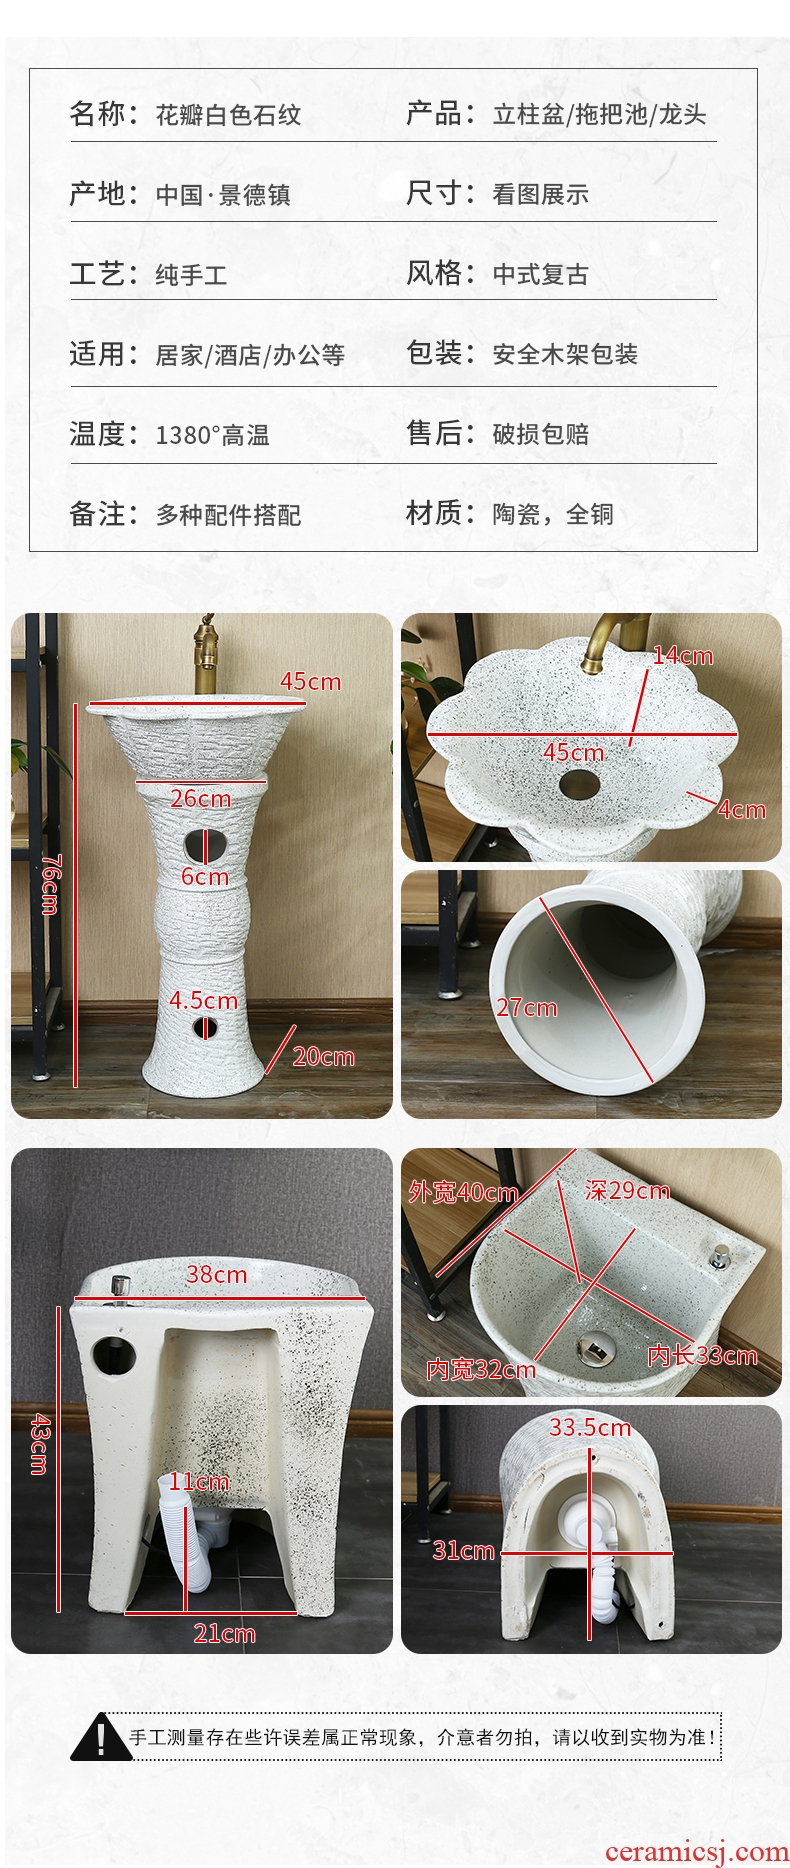 Post, neat new Chinese style ceramic lavabo floor balcony column basin of pillar type lavatory toilet